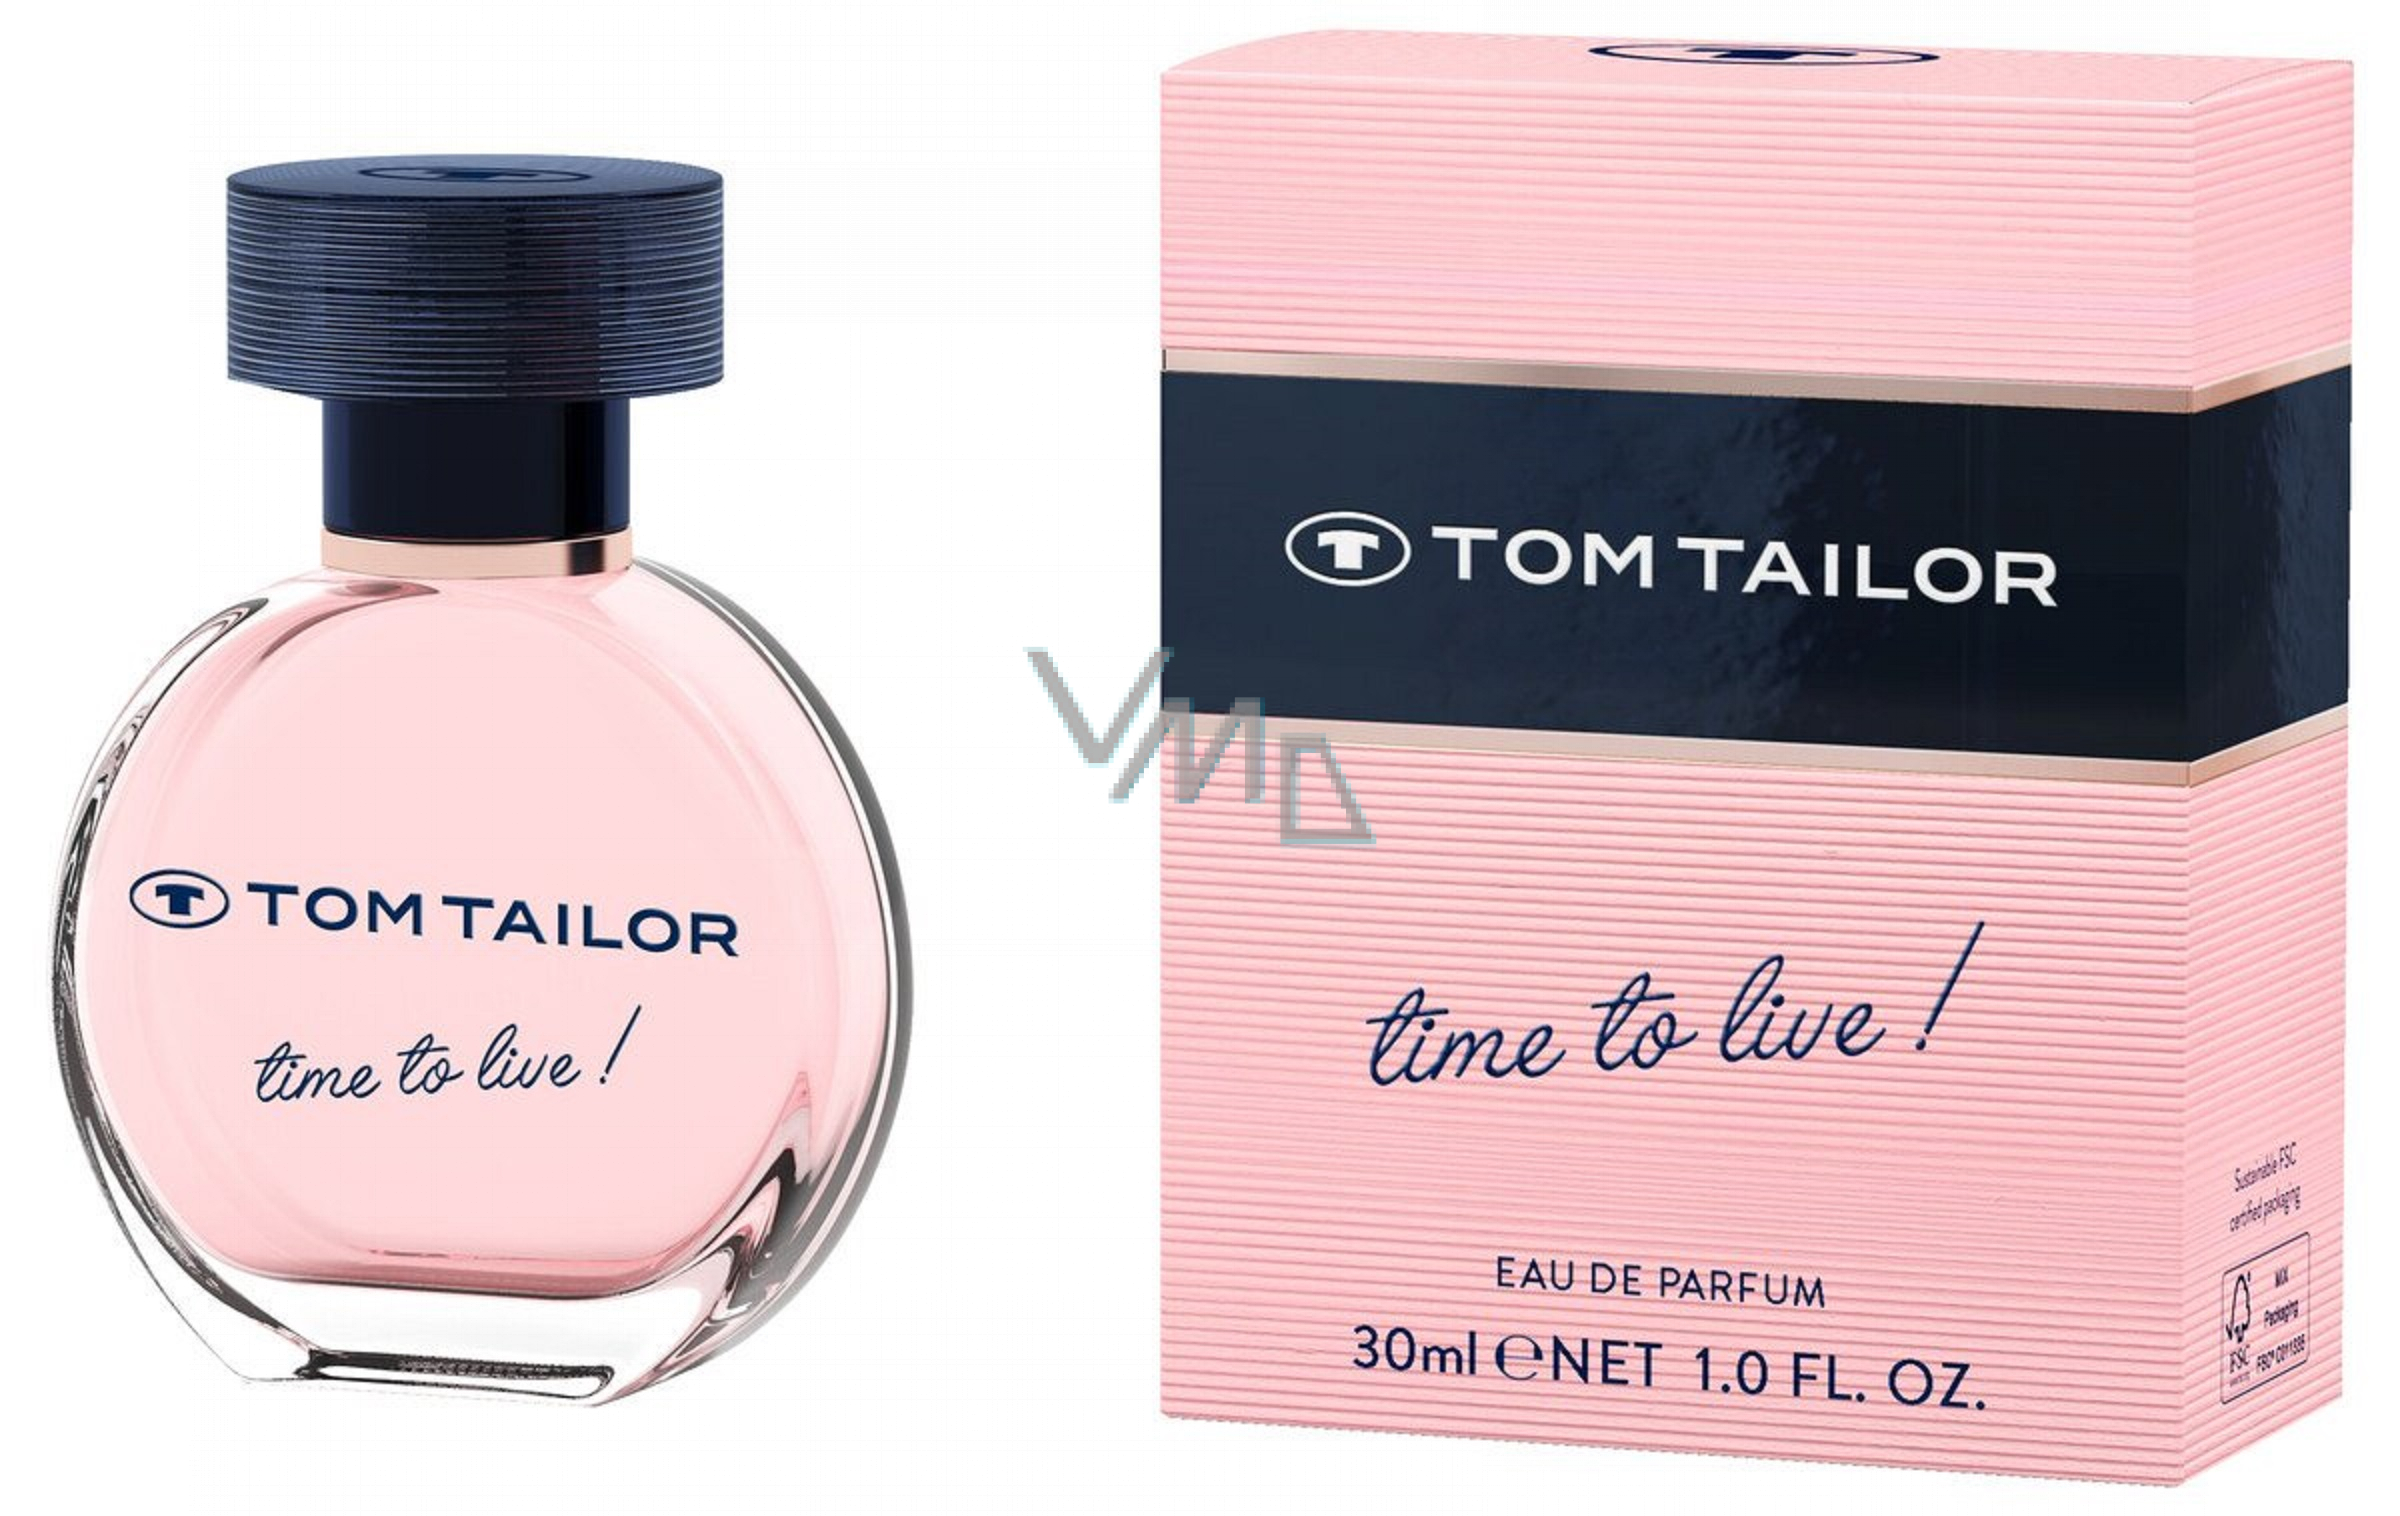 Tom Tailor Time to live! drogerie 30 ml parfumerie eau for - de Her VMD for - women parfum